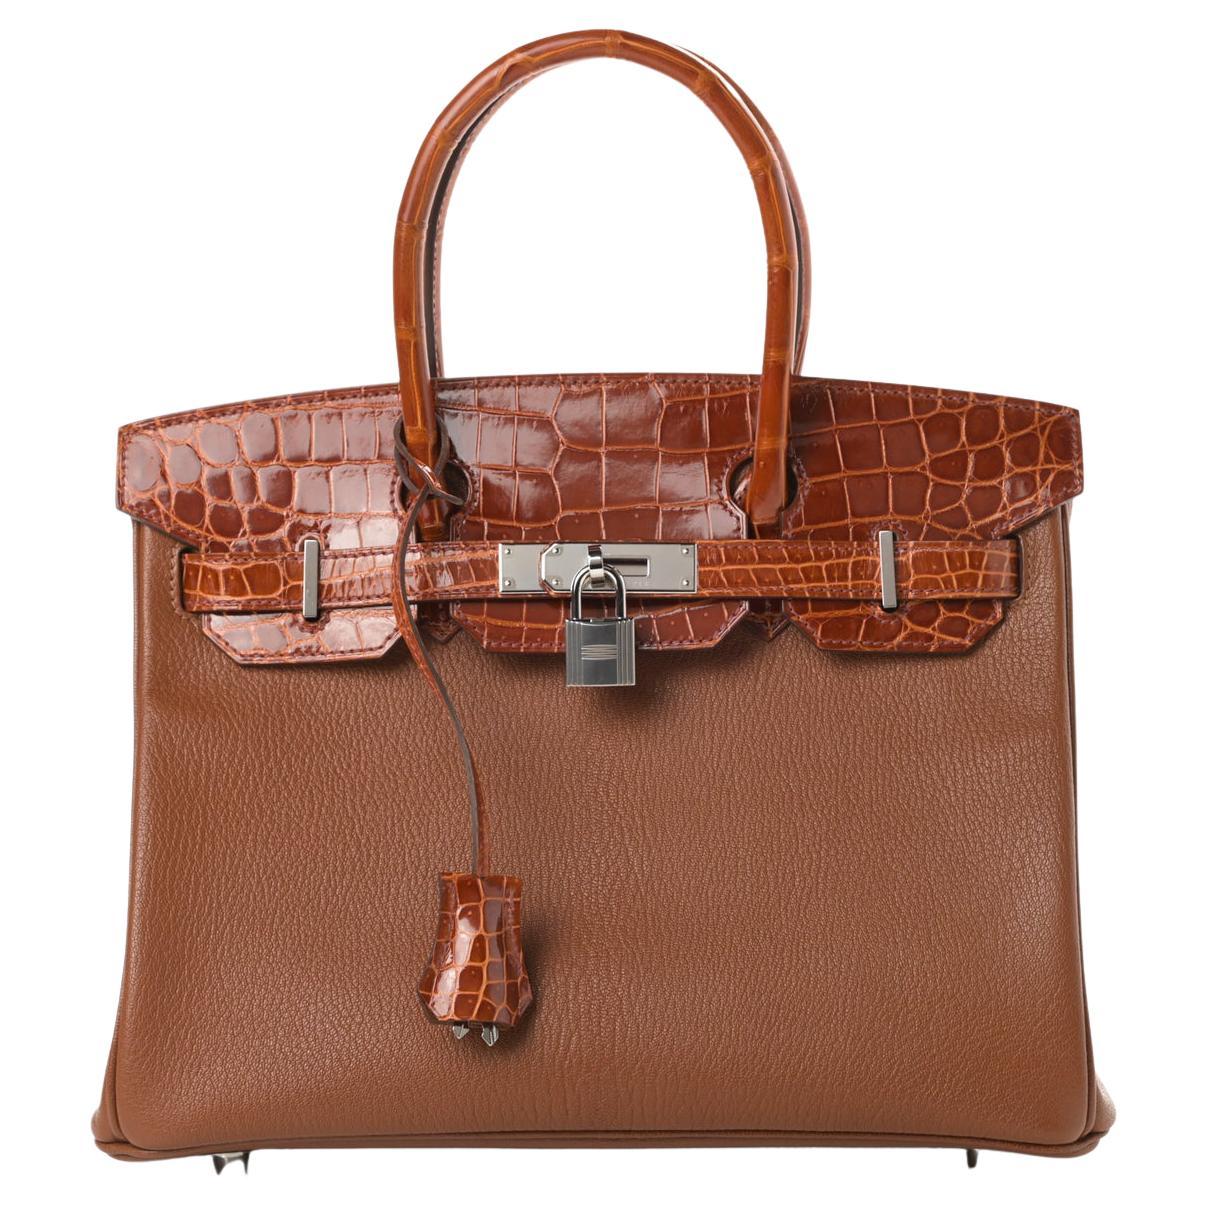 HERMES NEW Birkin 30 Touch Cognac Leather Crocodile Exotic Palladium Tote Bag